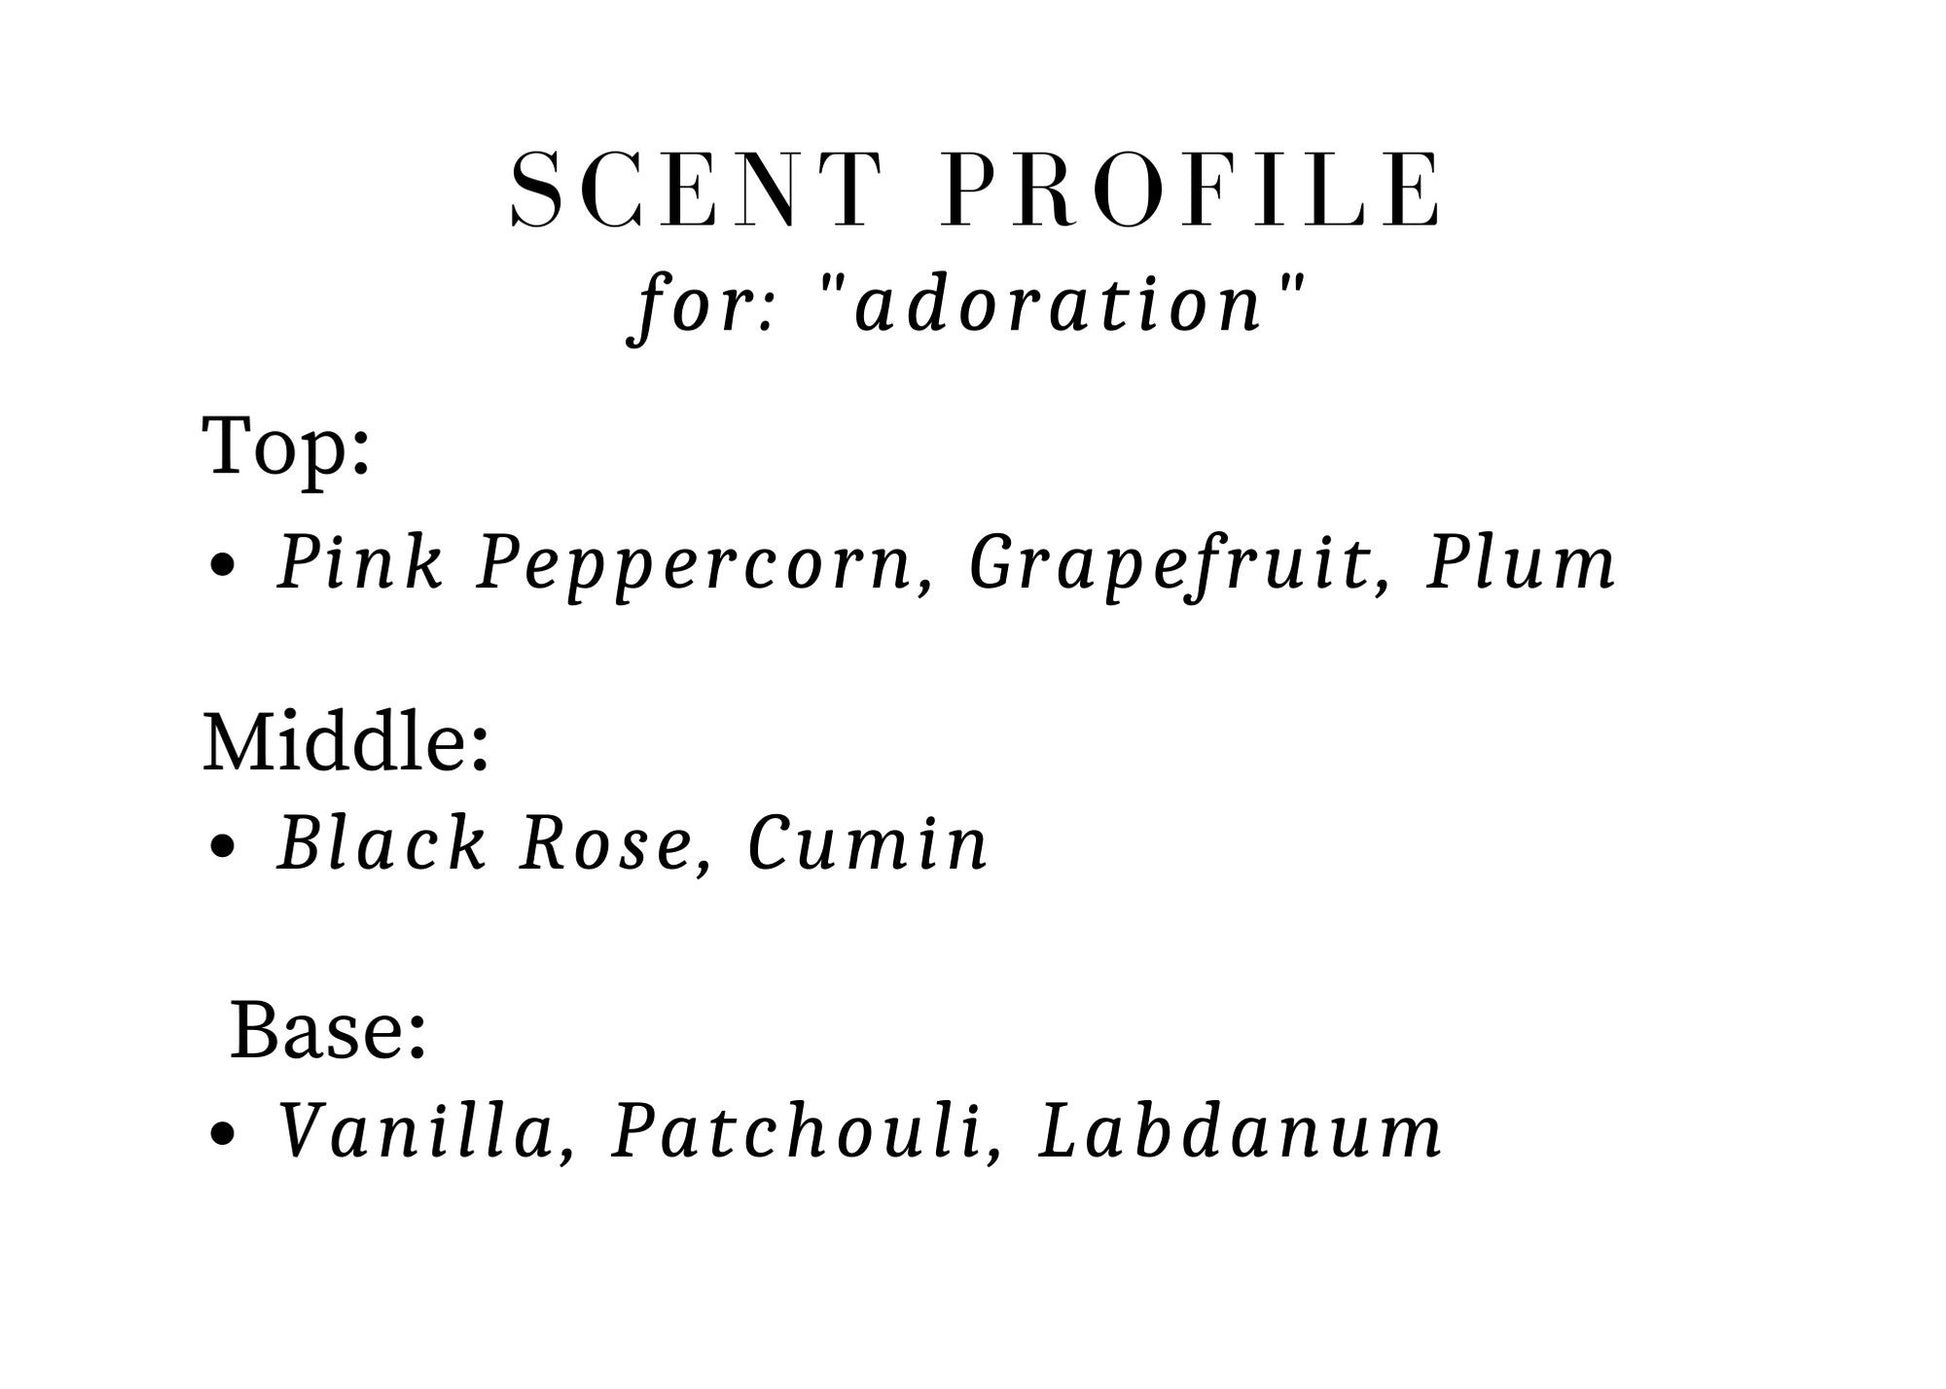 Scent profile card for adoration. Top: pink peppercorn, grapefruit, plum. Middle: black rose, cumin. Base: vanilla, patchouli, labdanum.